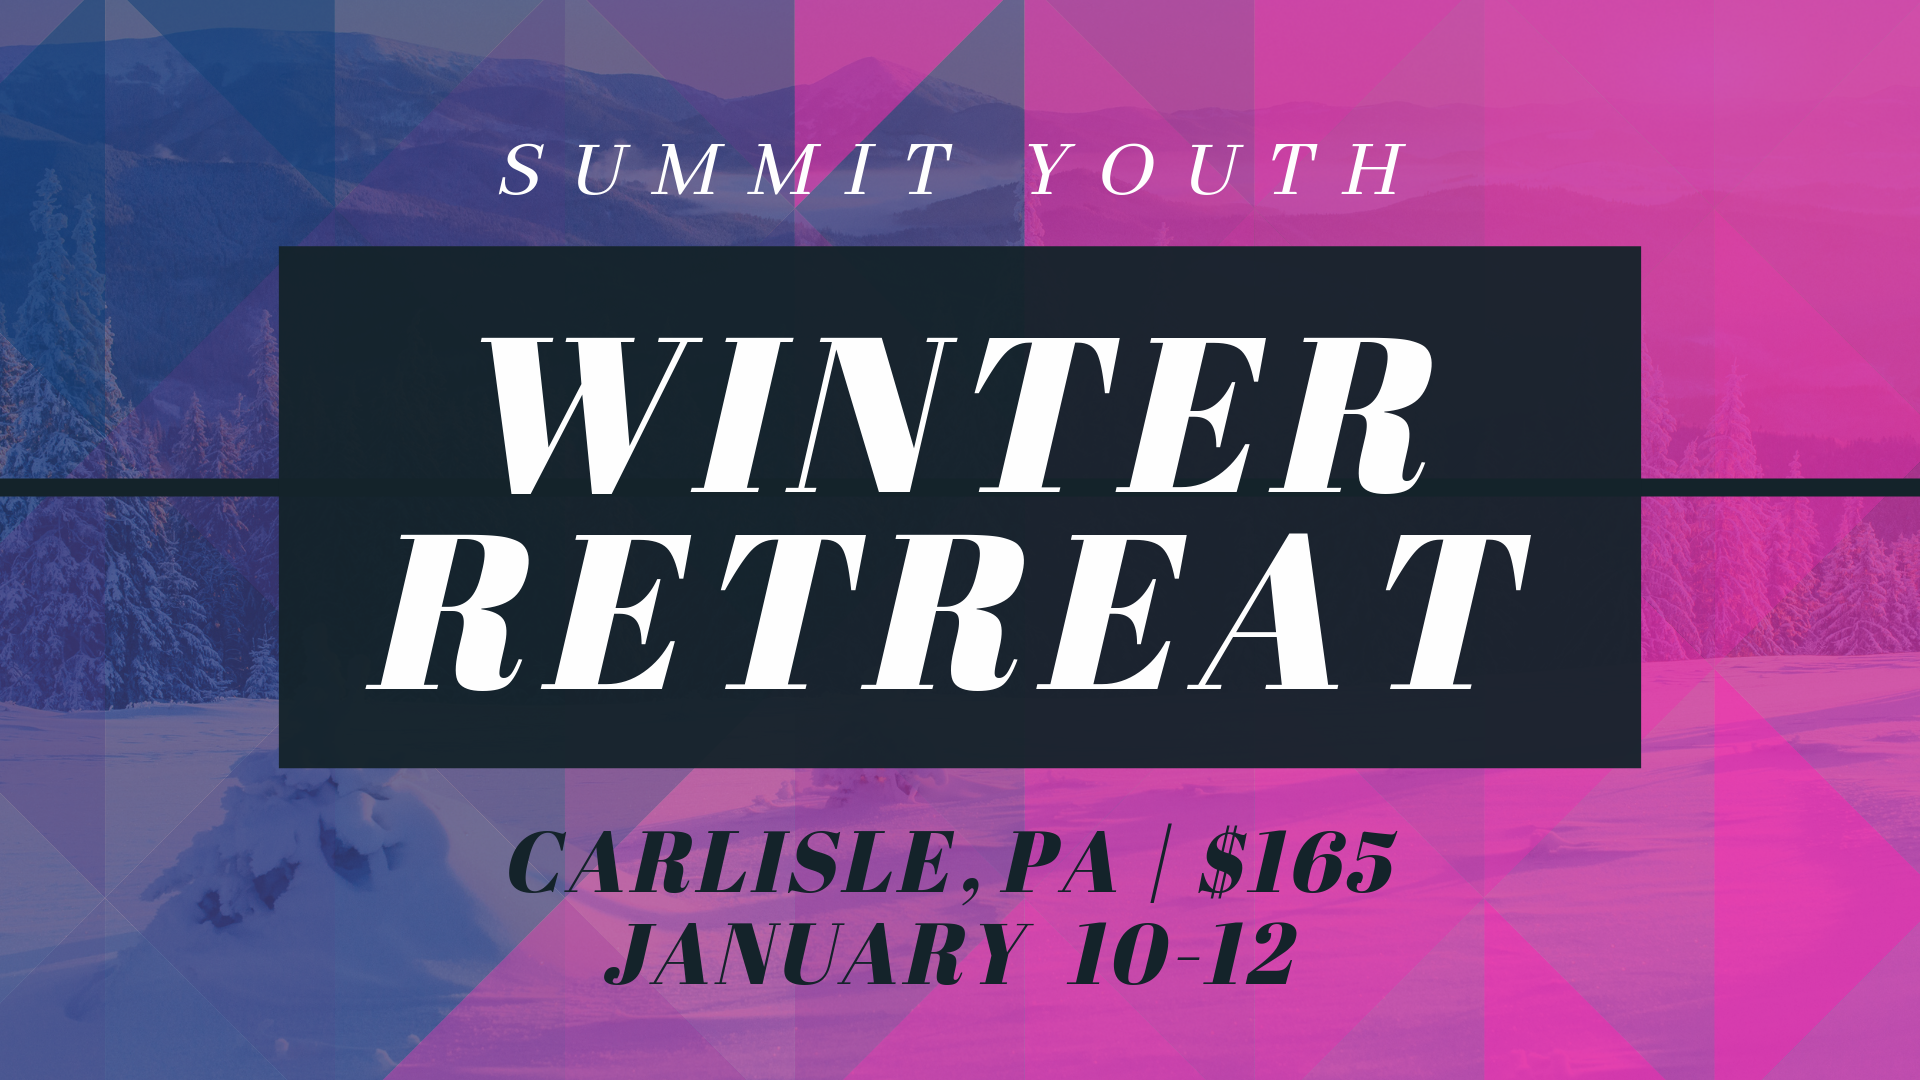 Youth Winter Retreat Summit Church